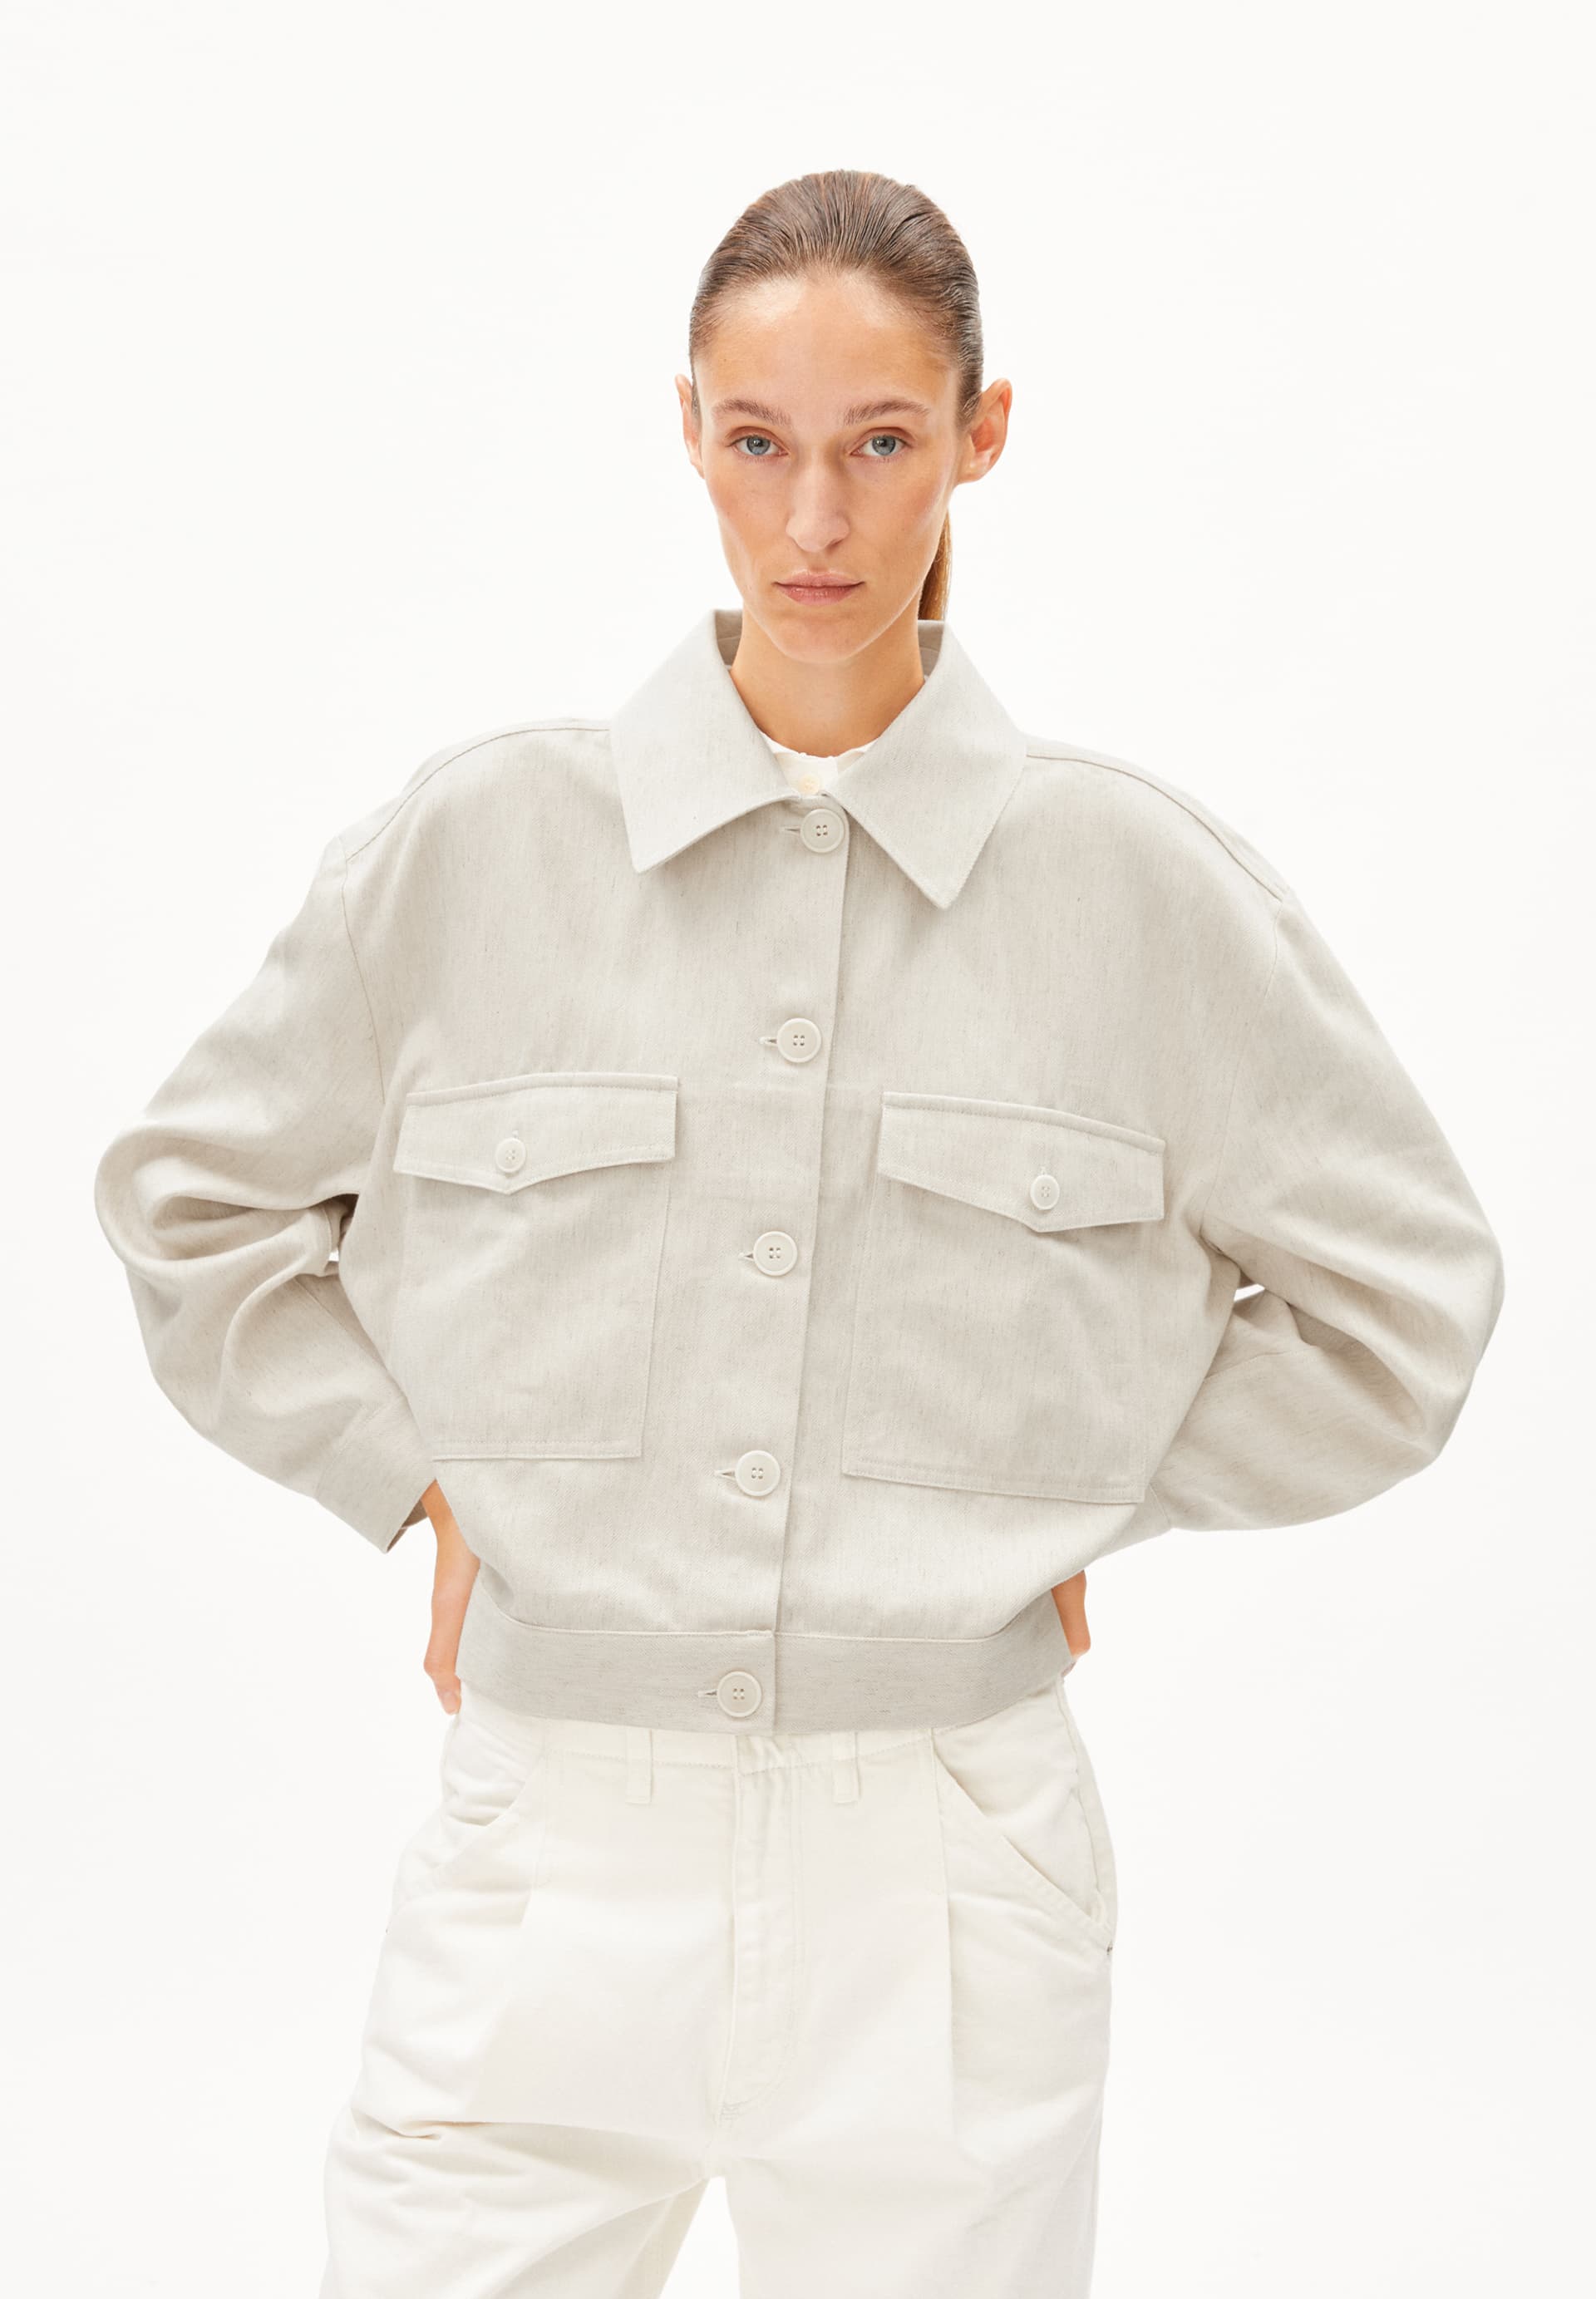 AALISEA LINO HEAVY Overshirt Oversized Fit made of Linen-Mix